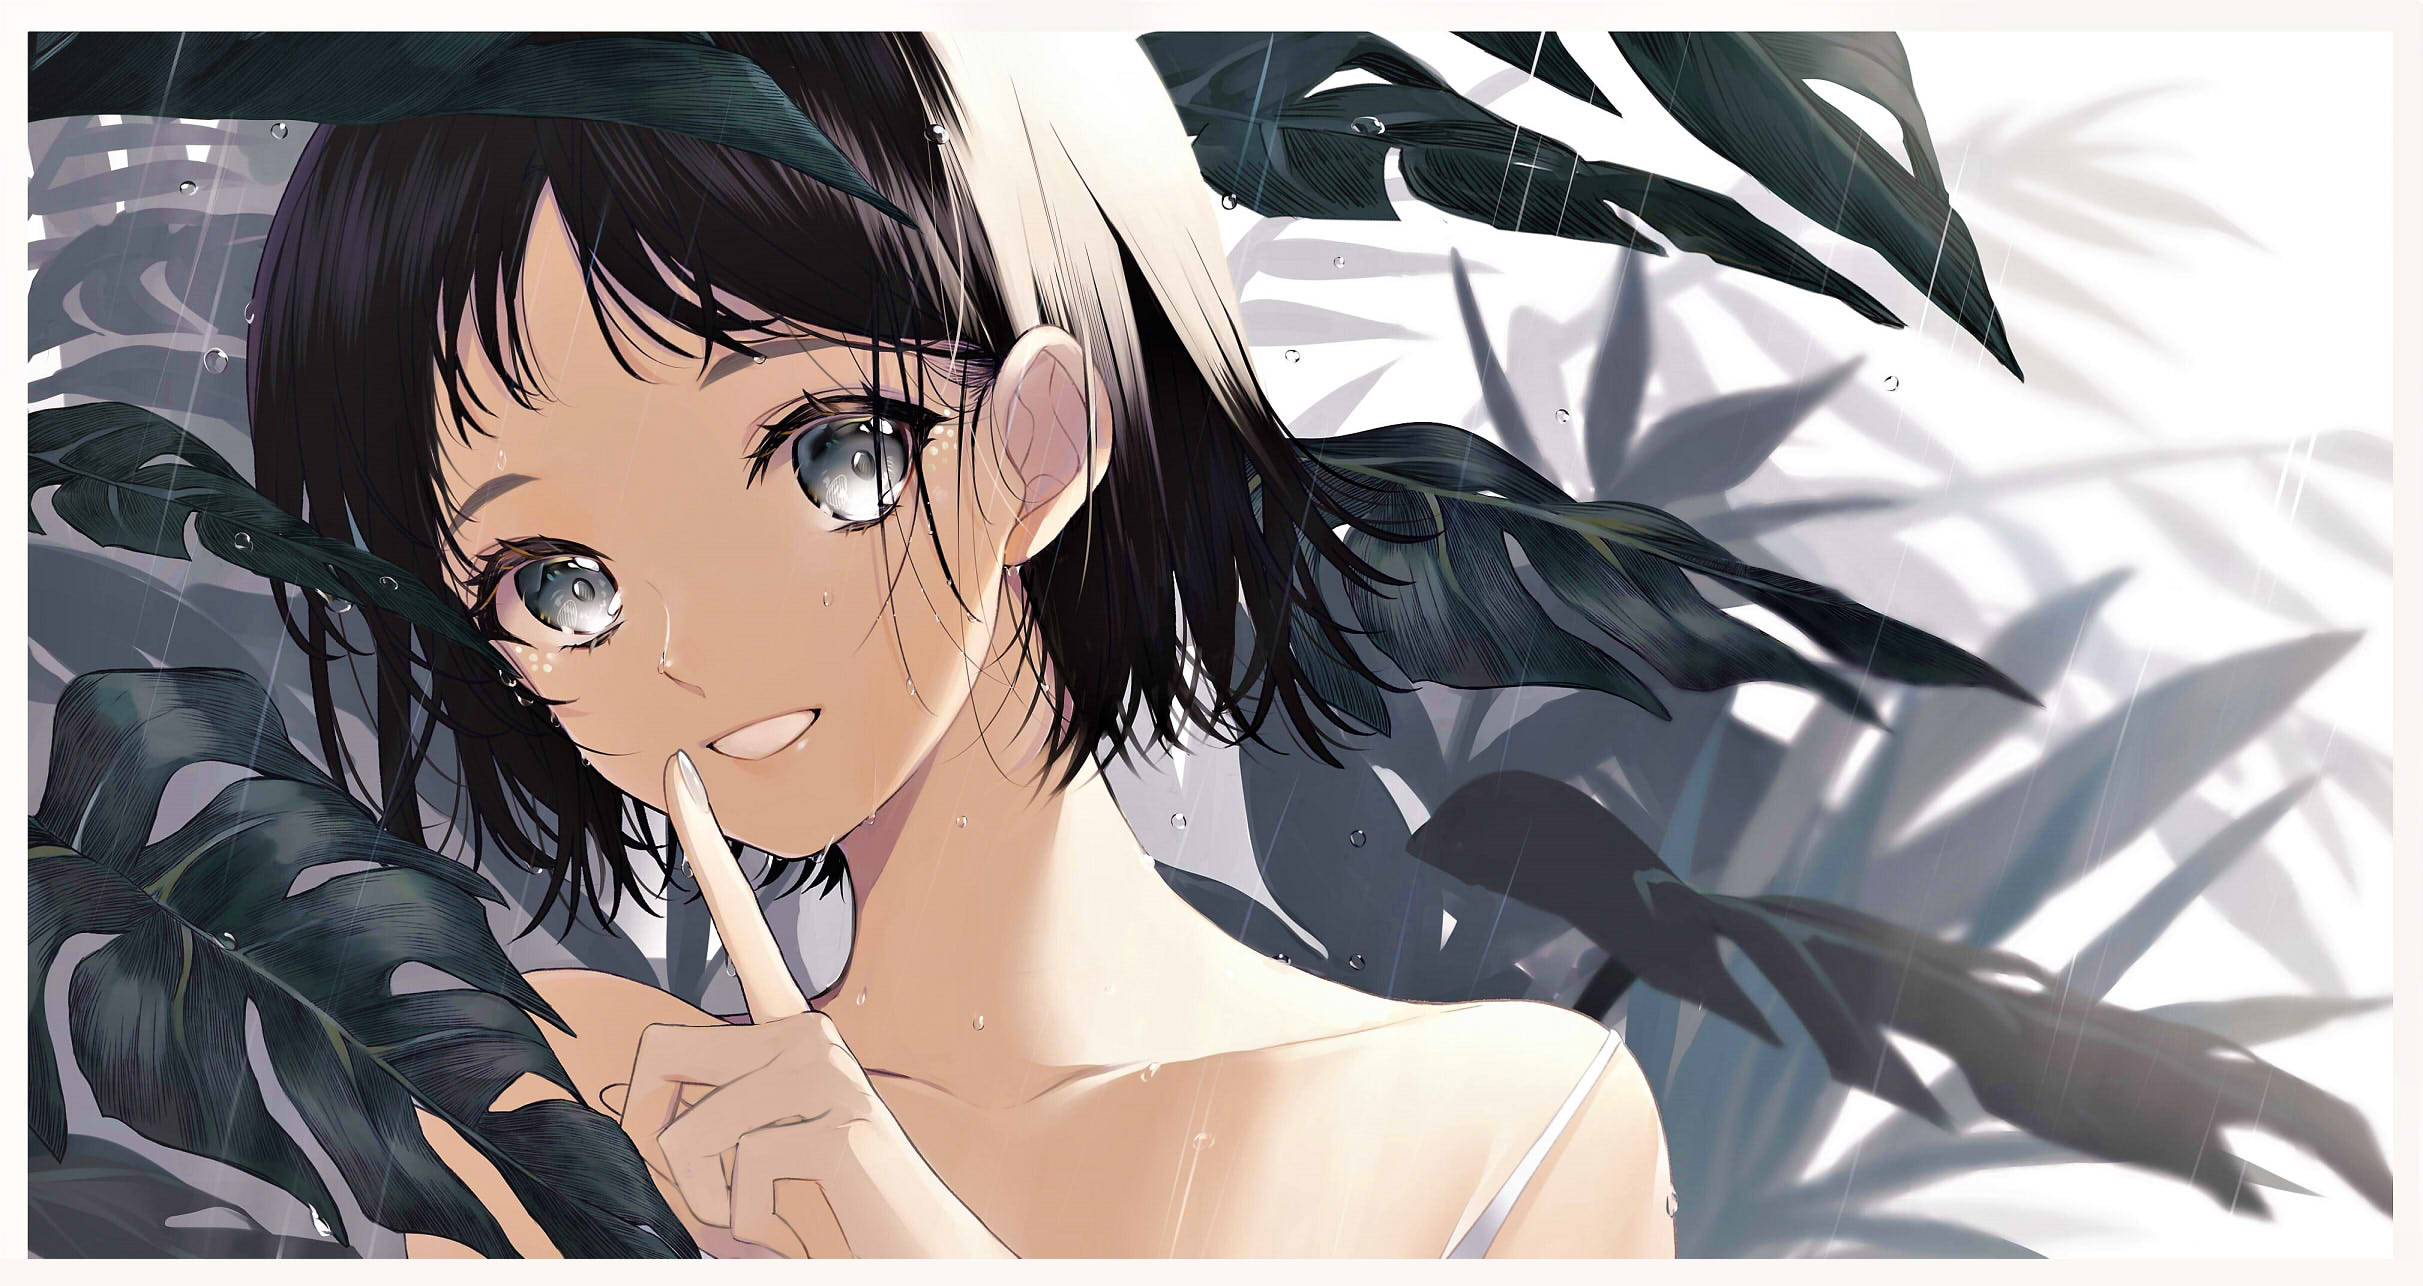 Anime 2423x1286 anime anime girls digital art artwork 2D portrait Sogawa black hair short hair gray eyes smiling wet rain